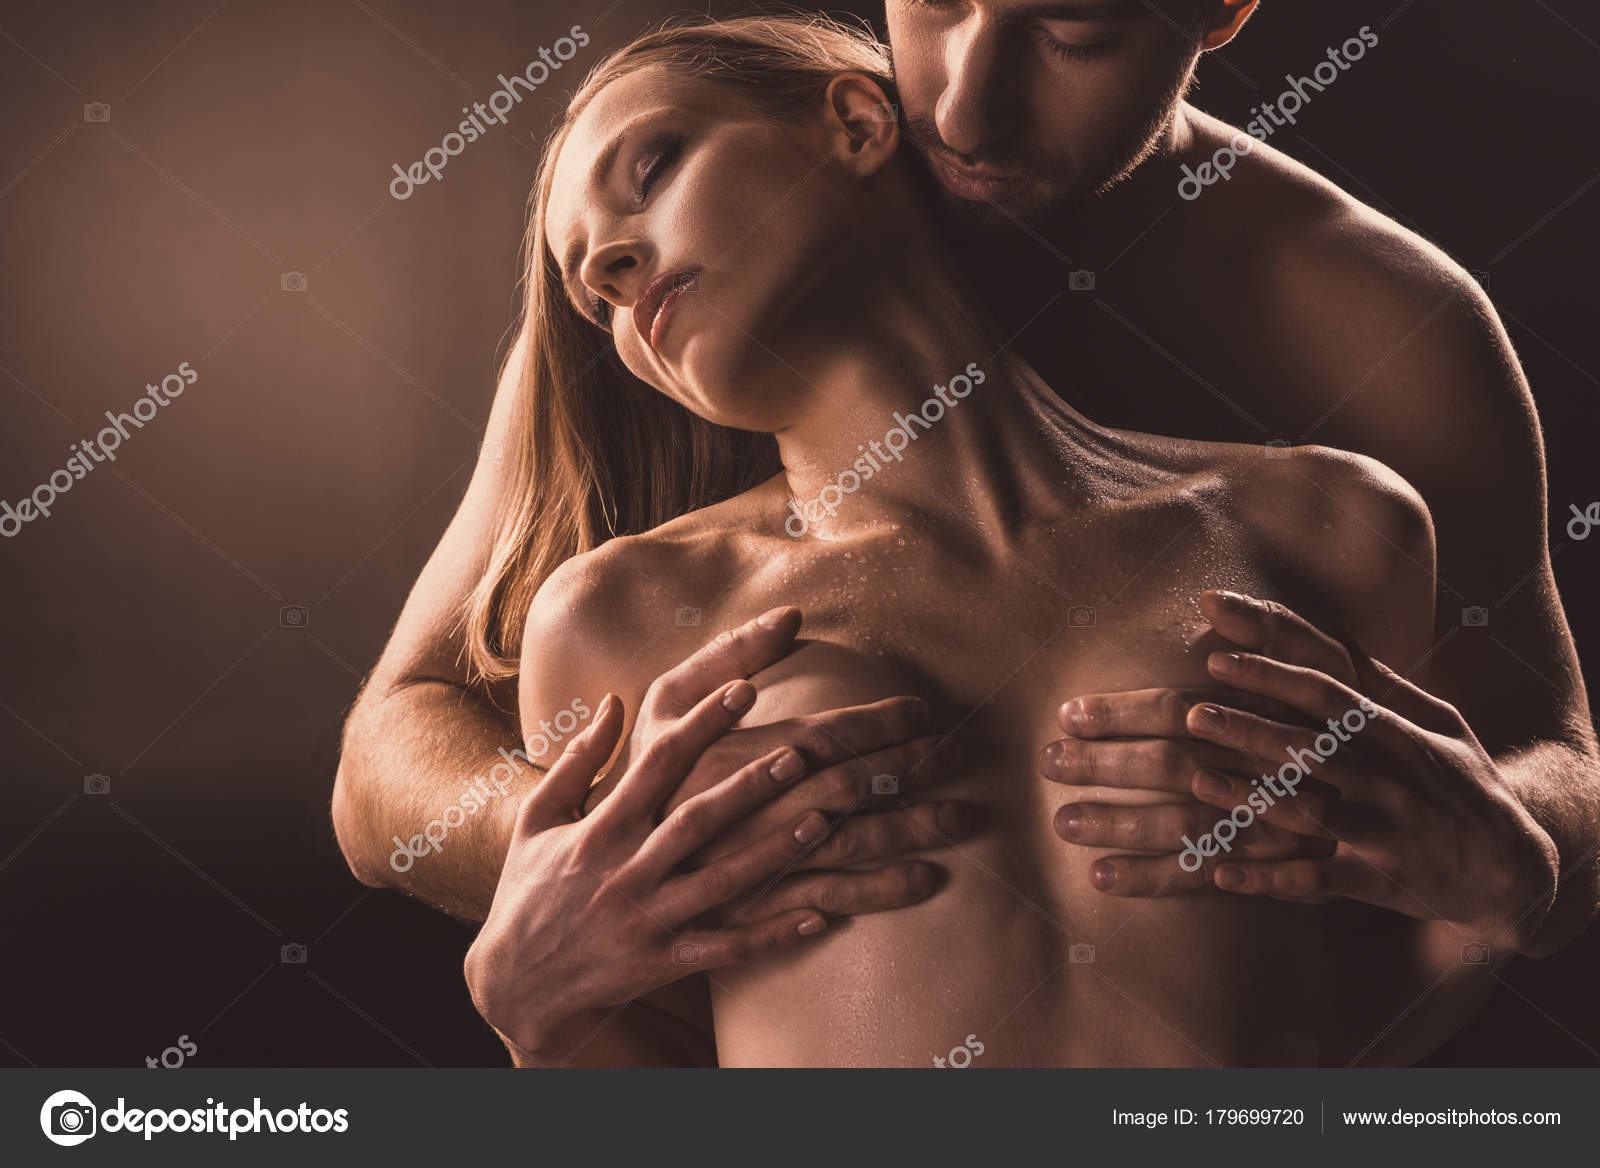 Touching boobs hot